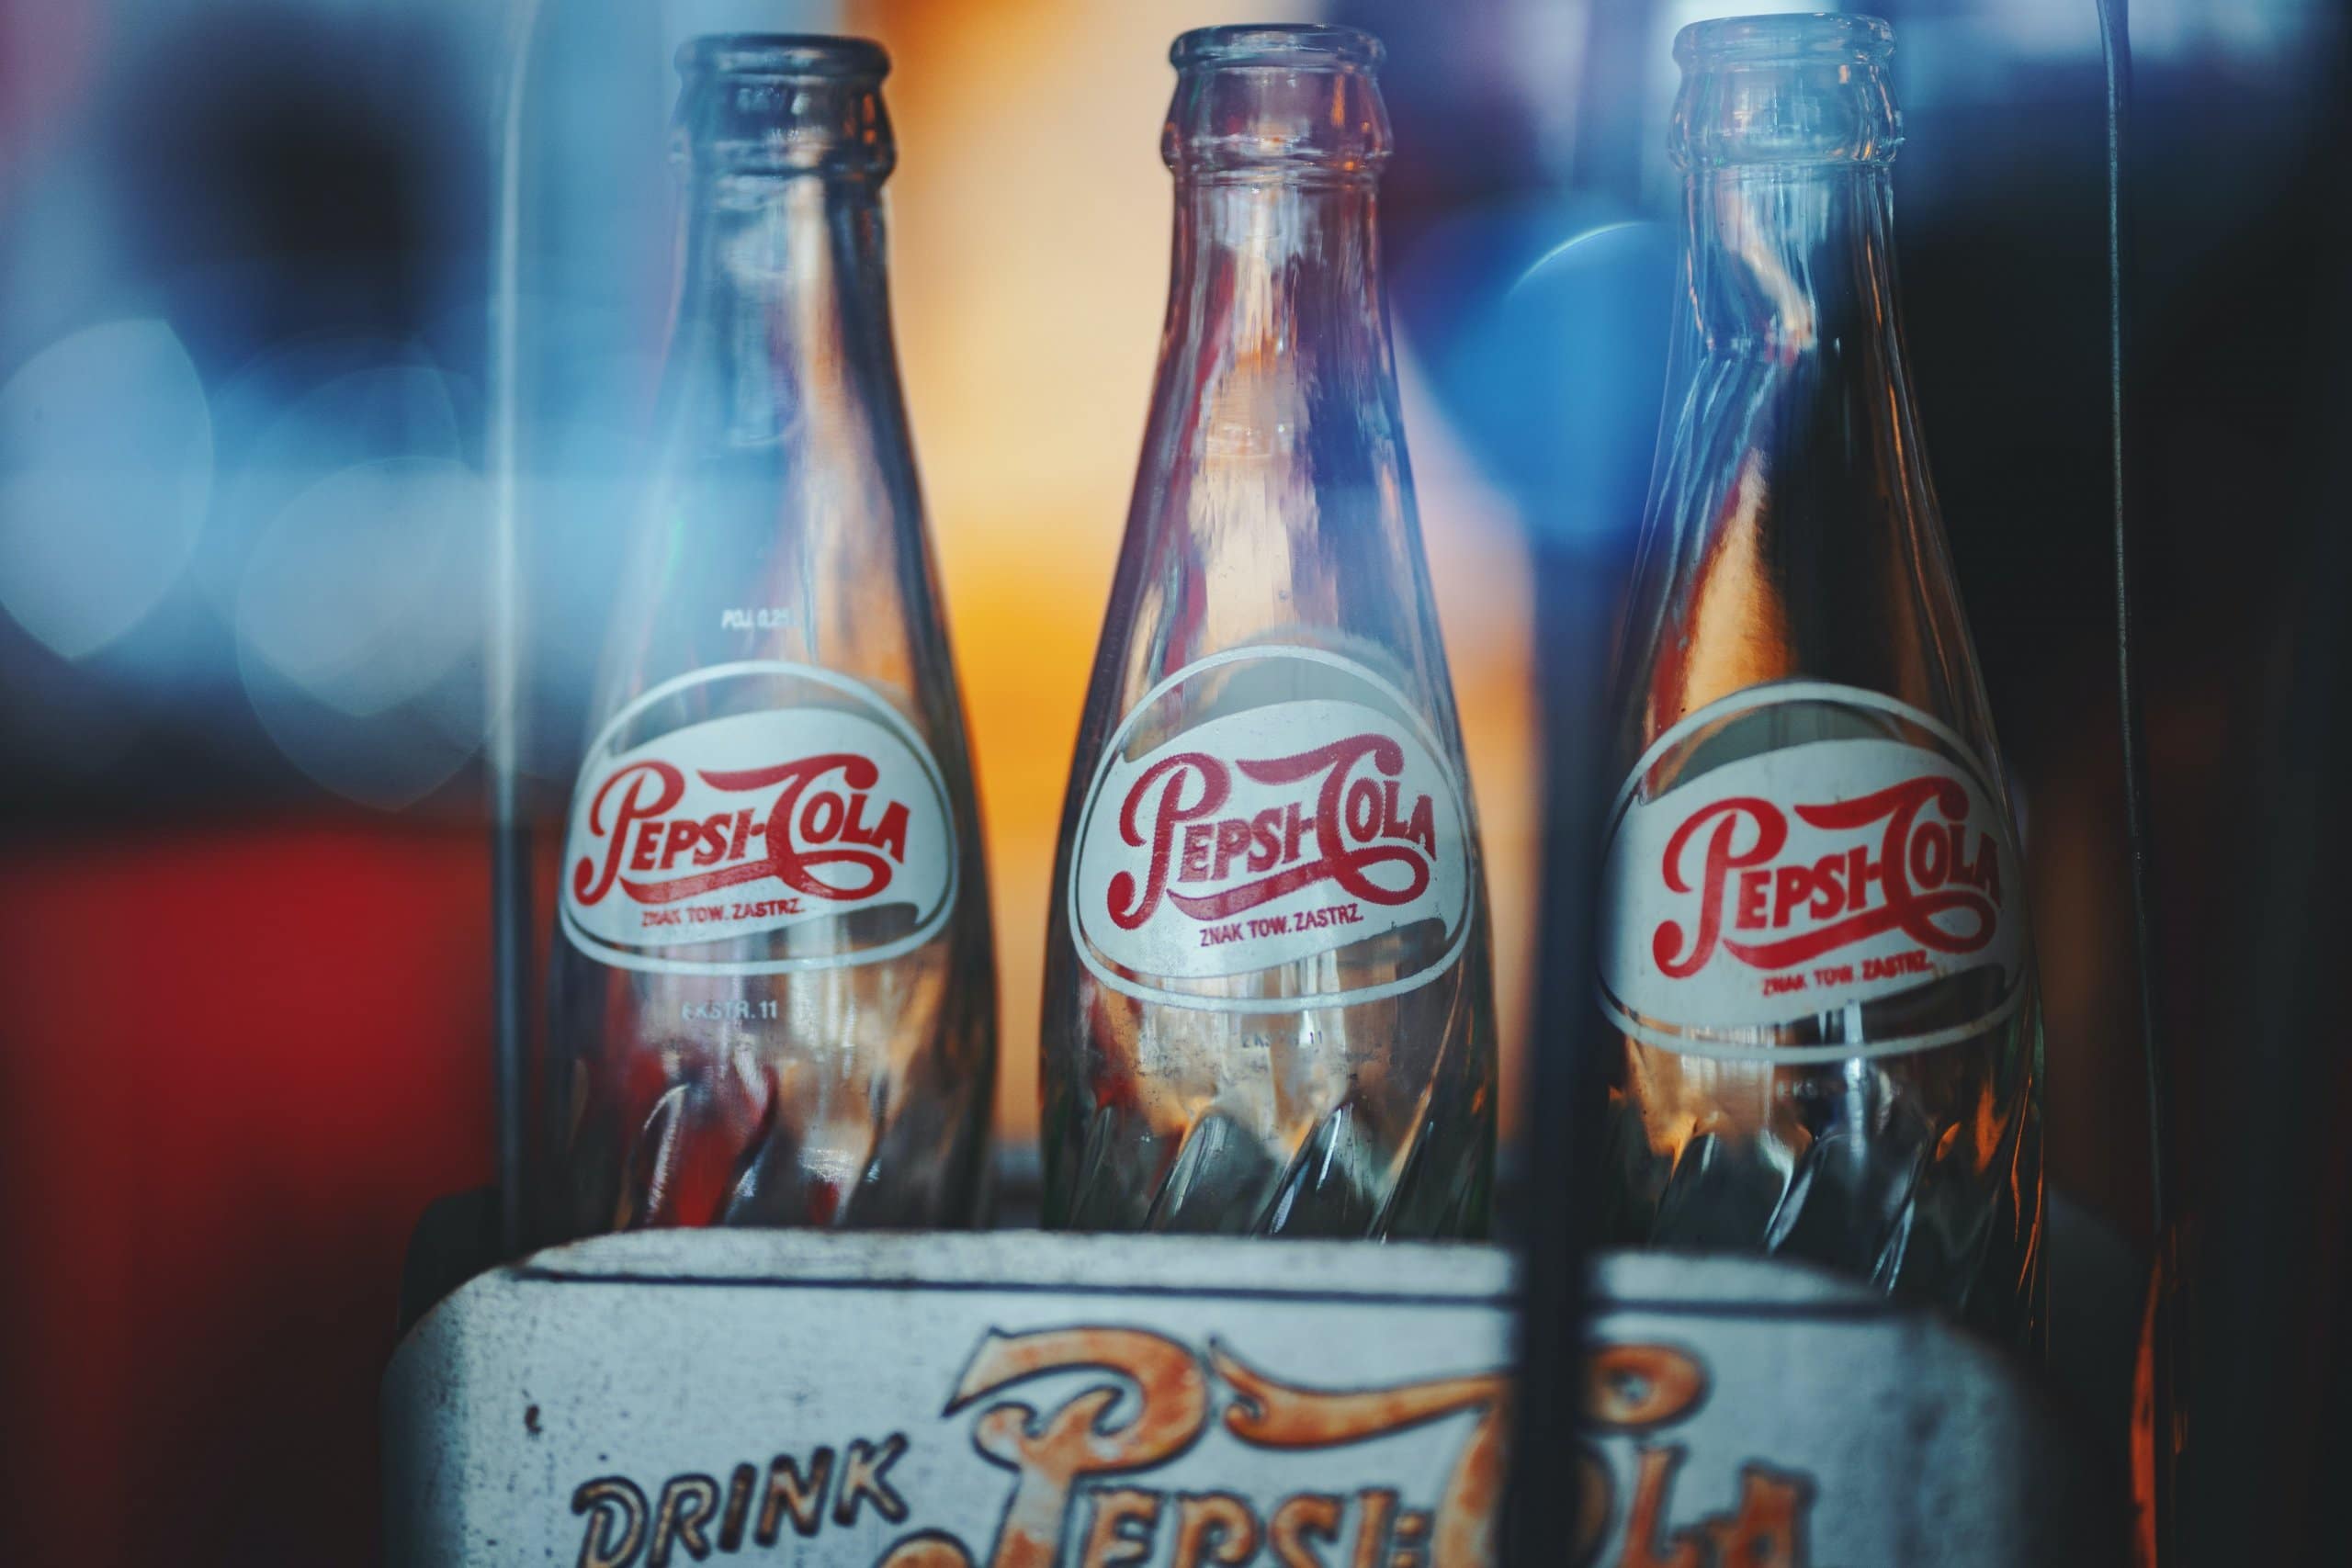 Pepsi-Cola bottles